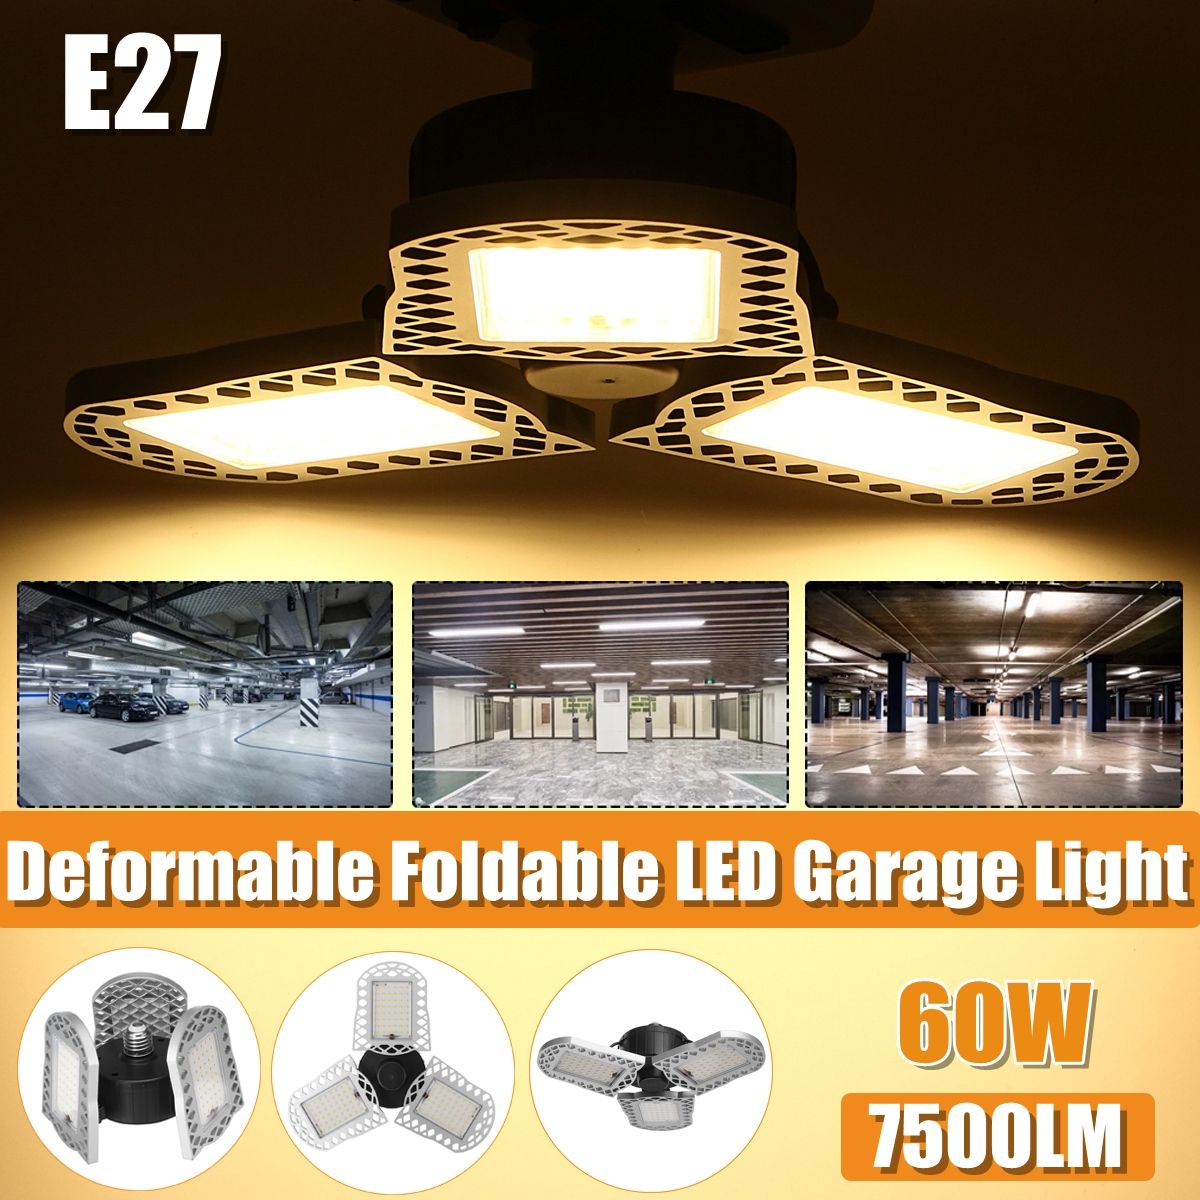 60W-LED-Garage-E27-Light-Bulb-Deformable-Ceiling-Fixture-Lights-Shop-Workshop-Lamp-1704752